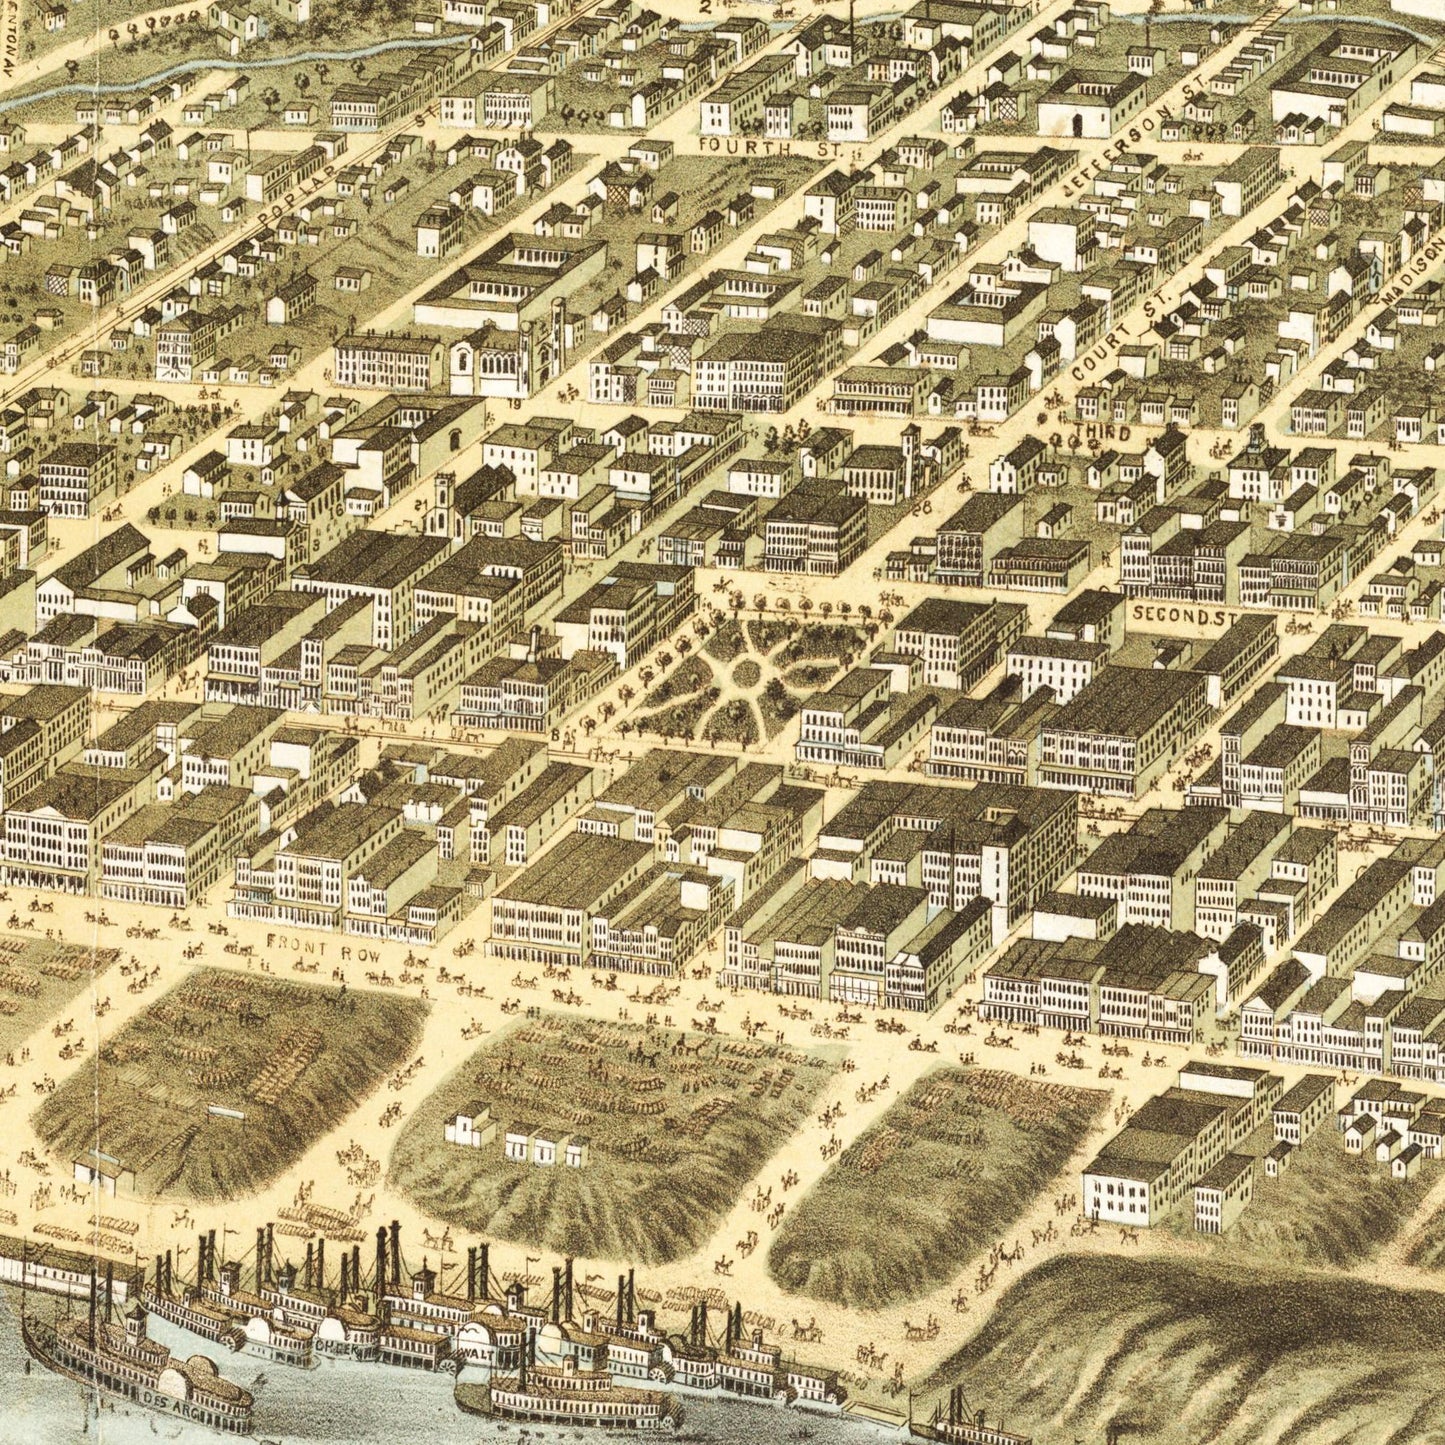 Historische Stadtansicht Memphis um 1870